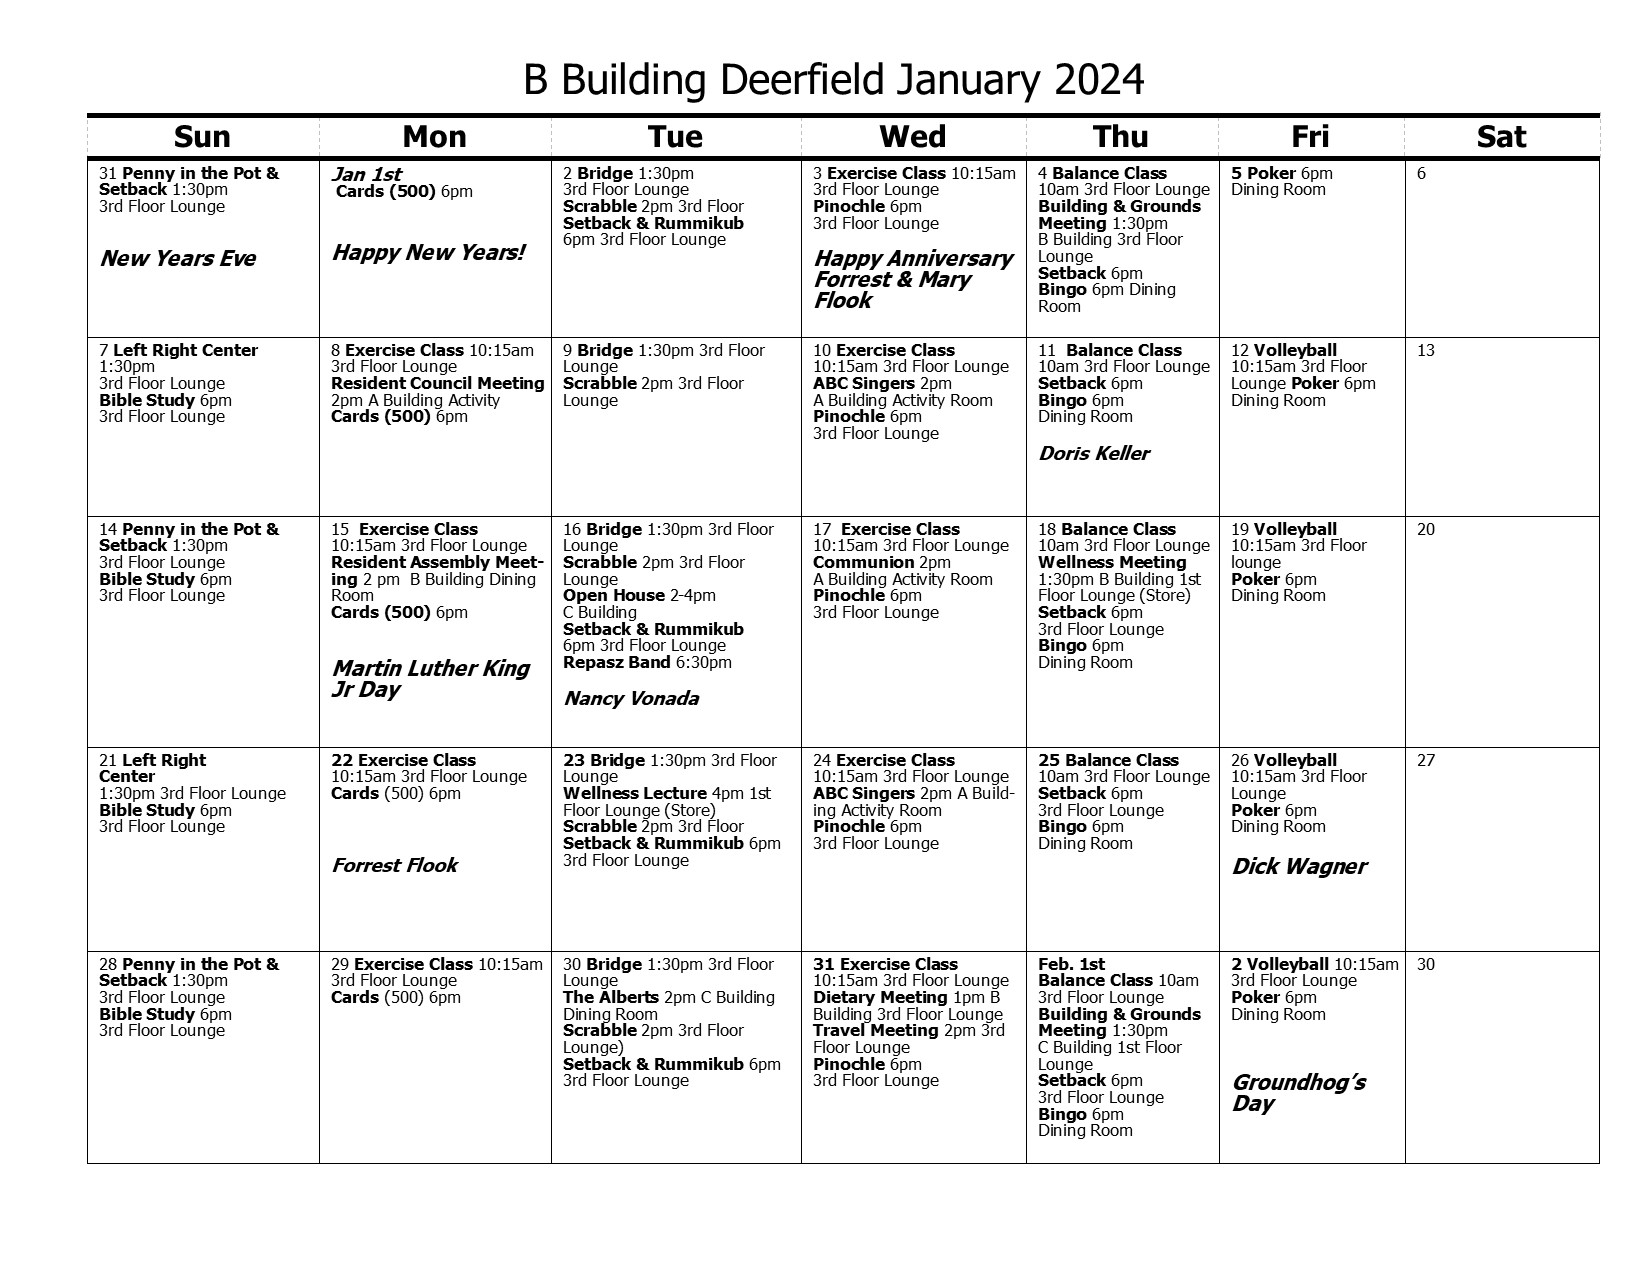 B Building Calendar January 2024